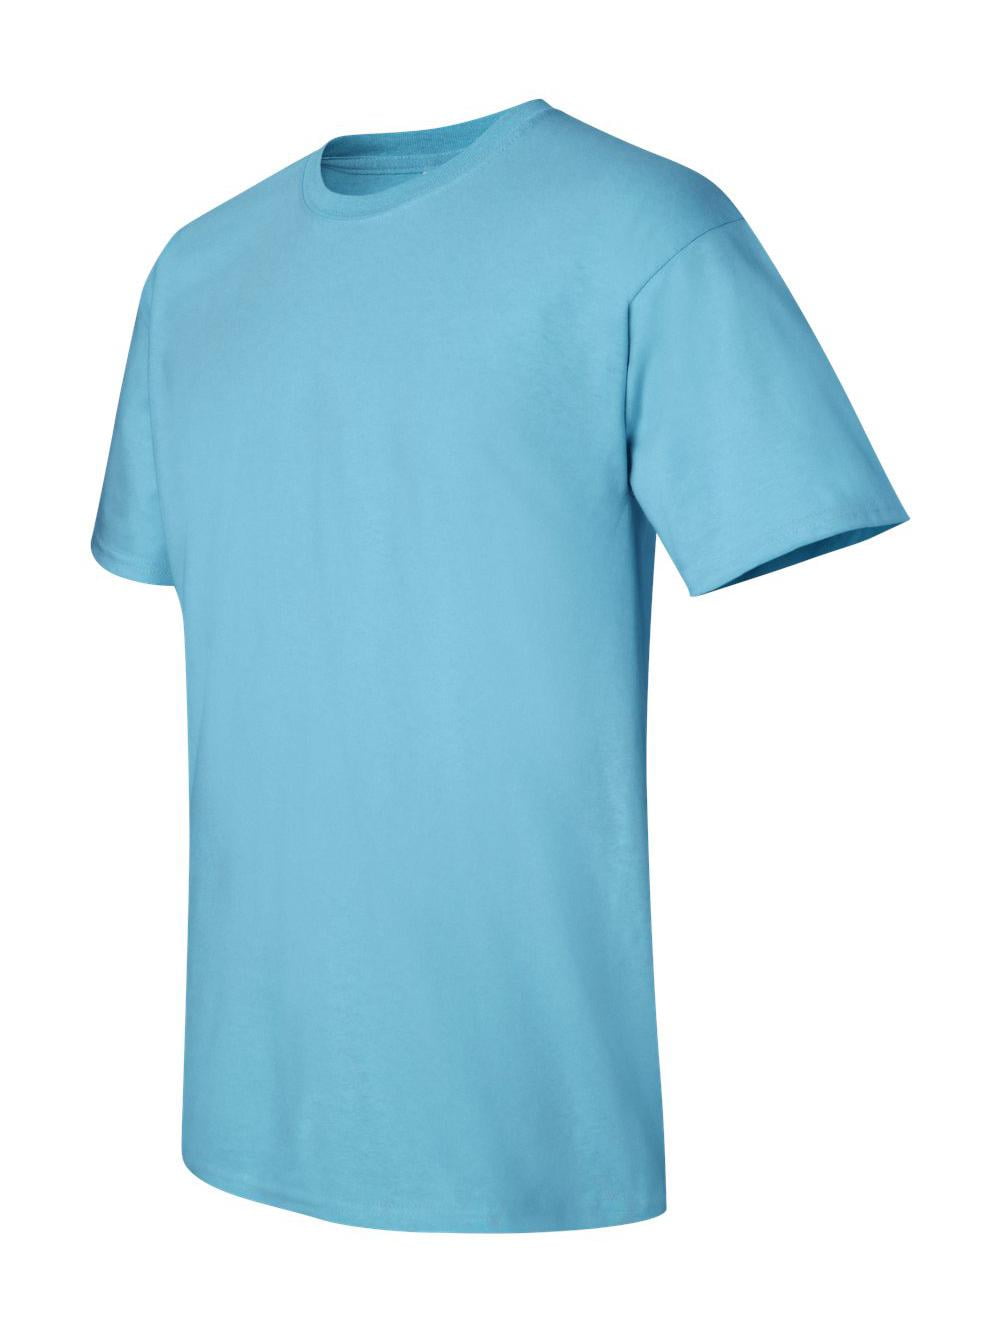 Gildan - Ultra Cotton T-Shirt - 2000 - Sky - Size: L - Walmart.com